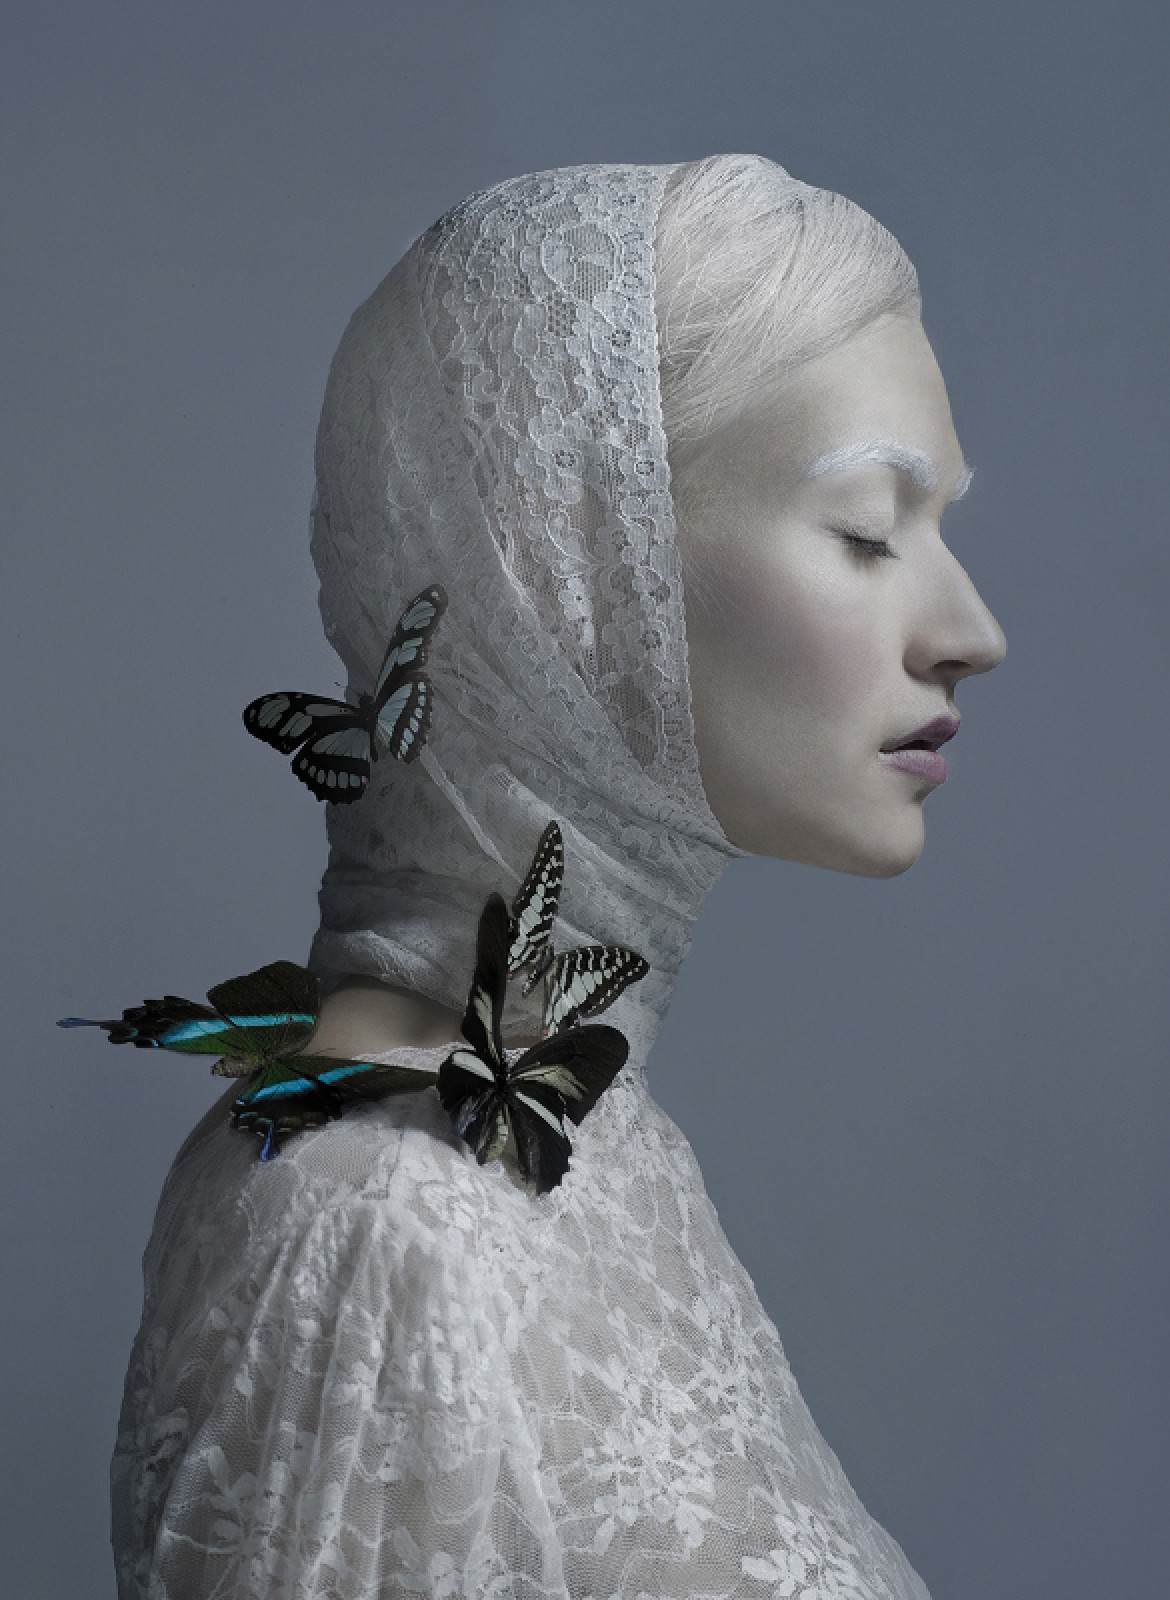 fot. Marzena Kolarz, z serii "White Monarchy", Nagroda Silver w profesjonalnej kategorii Advertising